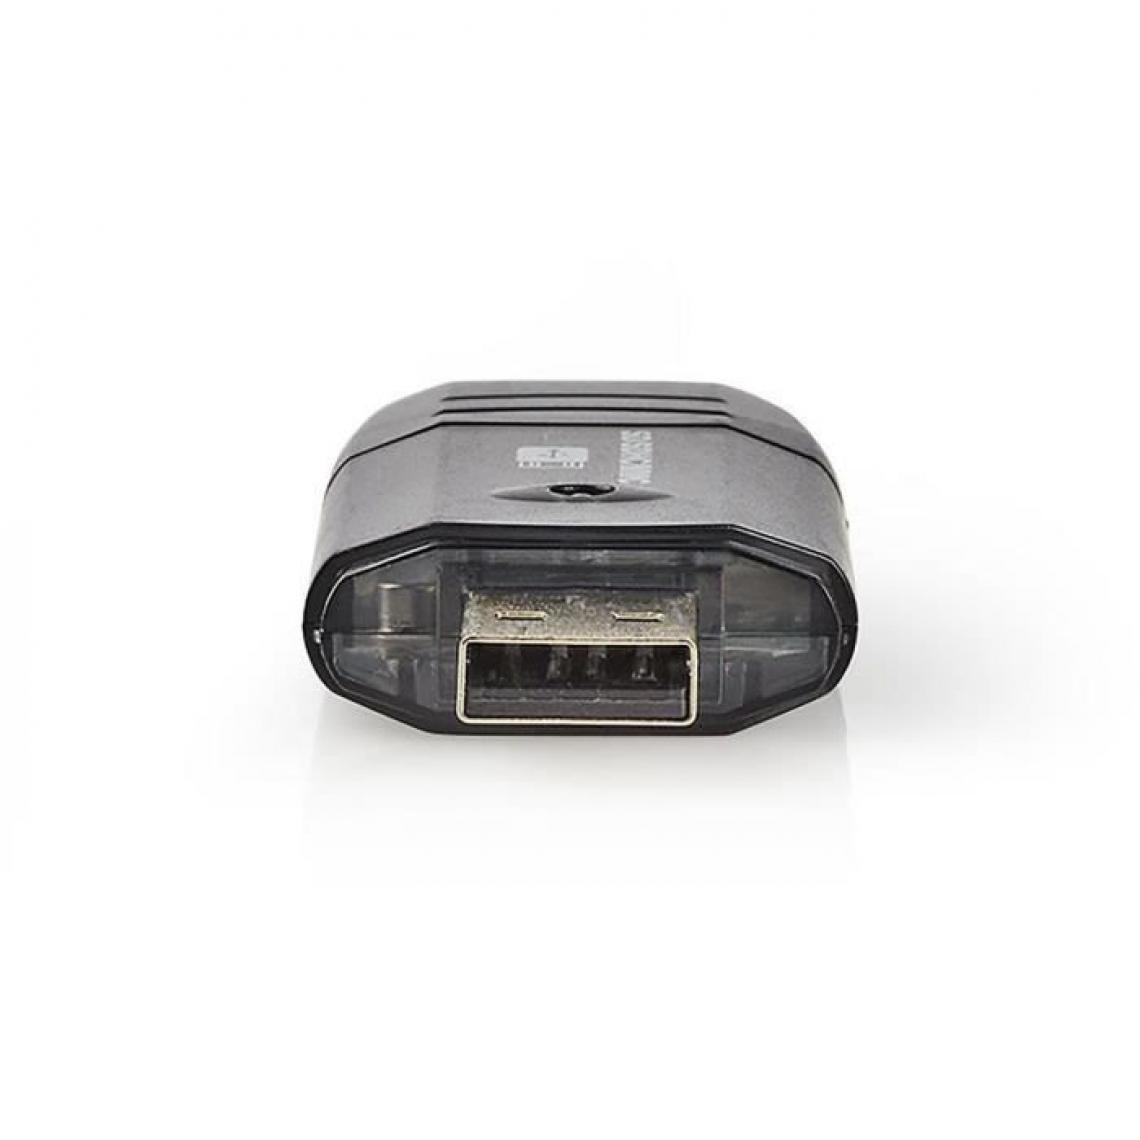 Nedis - Nedis Lecteur de carte | Multicarte | USB 2.0 - Accessoires Boitier PC